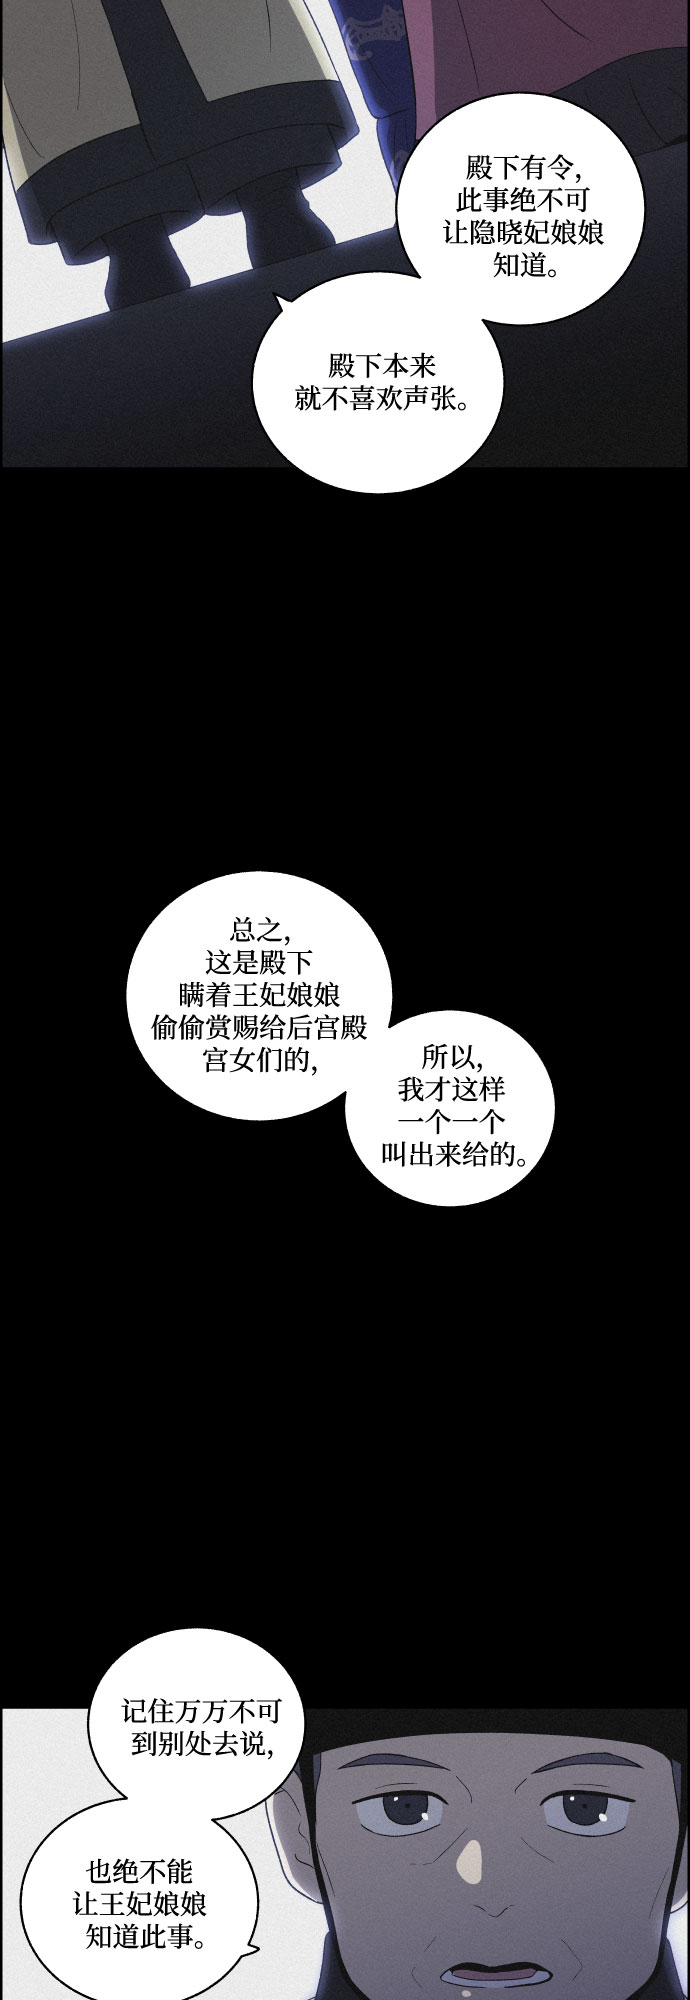 幻像恋歌 - [第50话] 追踪(1/2) - 2